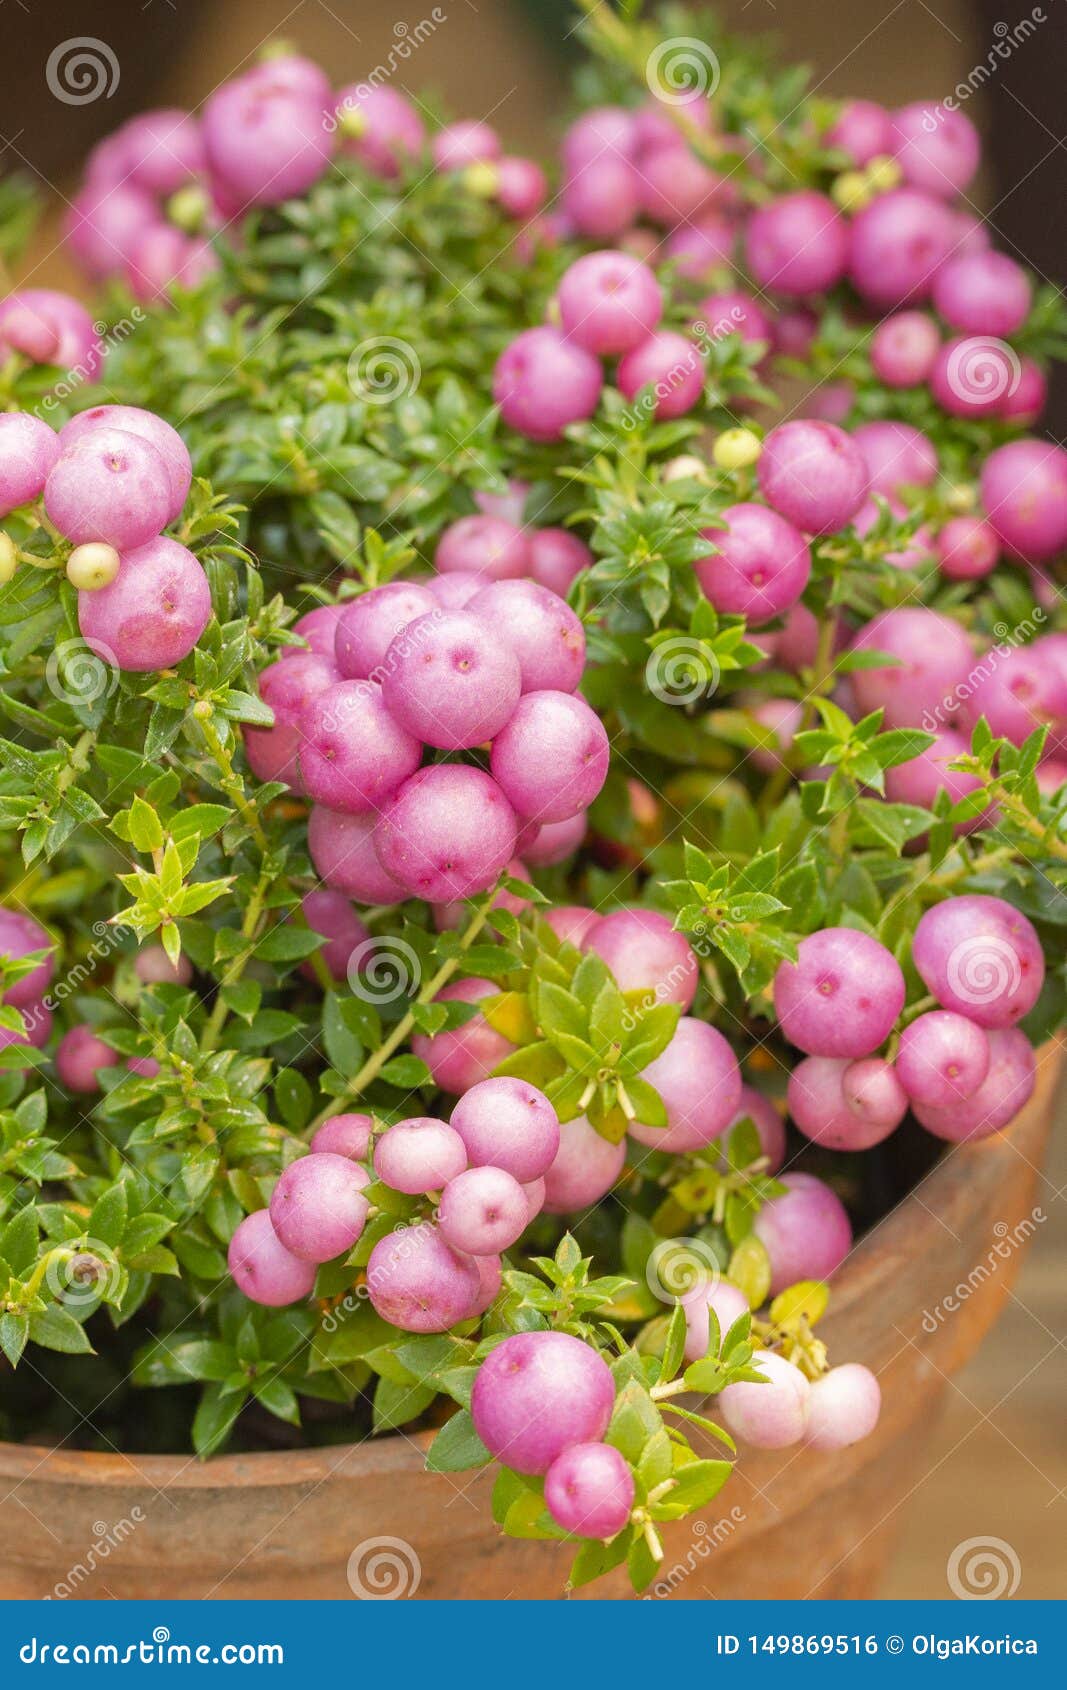 pernettya gaulteriya pinkberry berry. decorative evergreen shrub of the heather family. pernettya fruits are pink white purple.